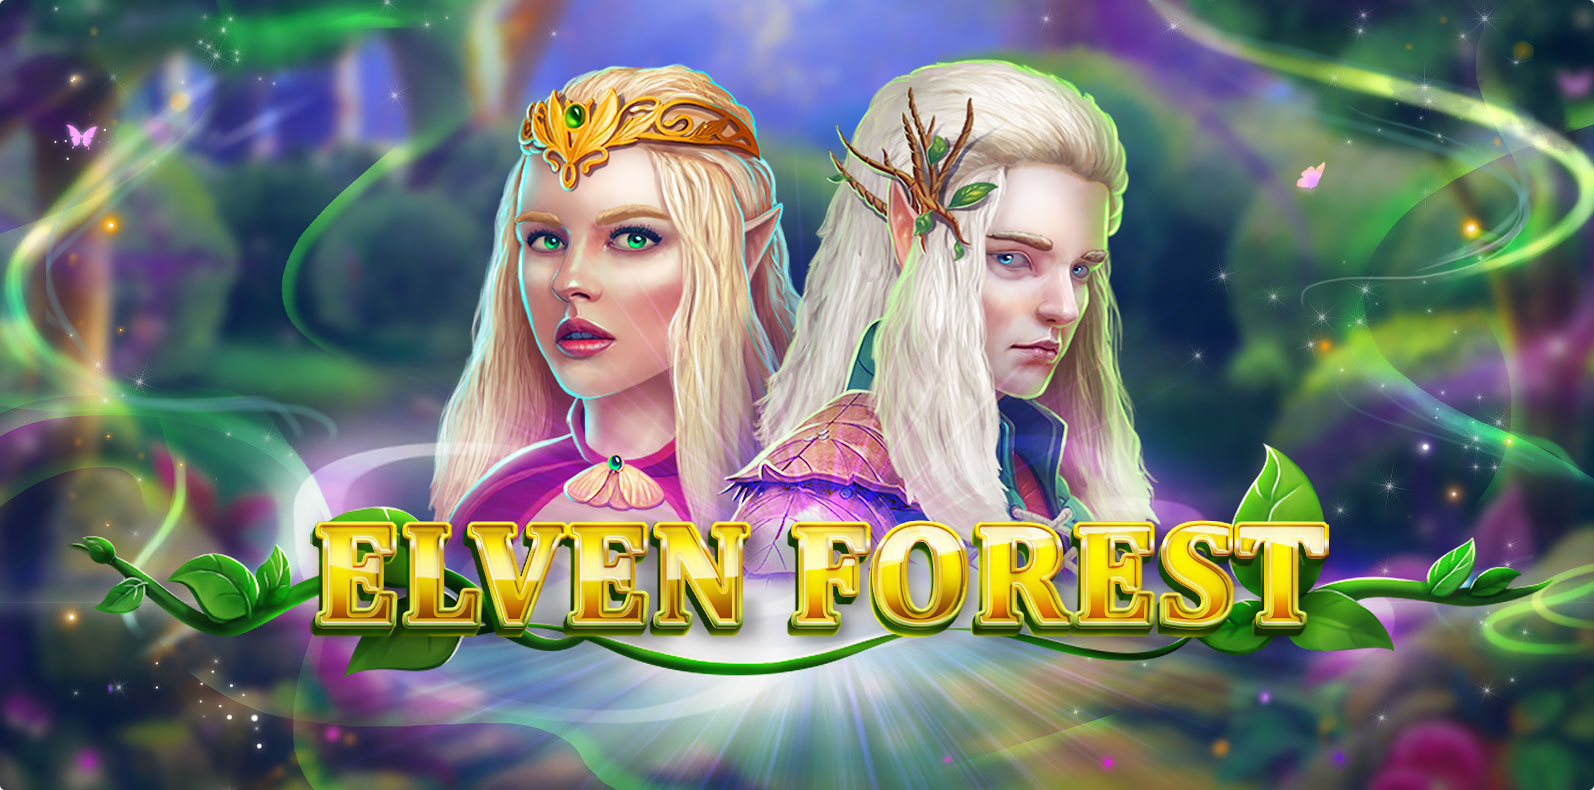 Elven Forest - slot machine game theme design